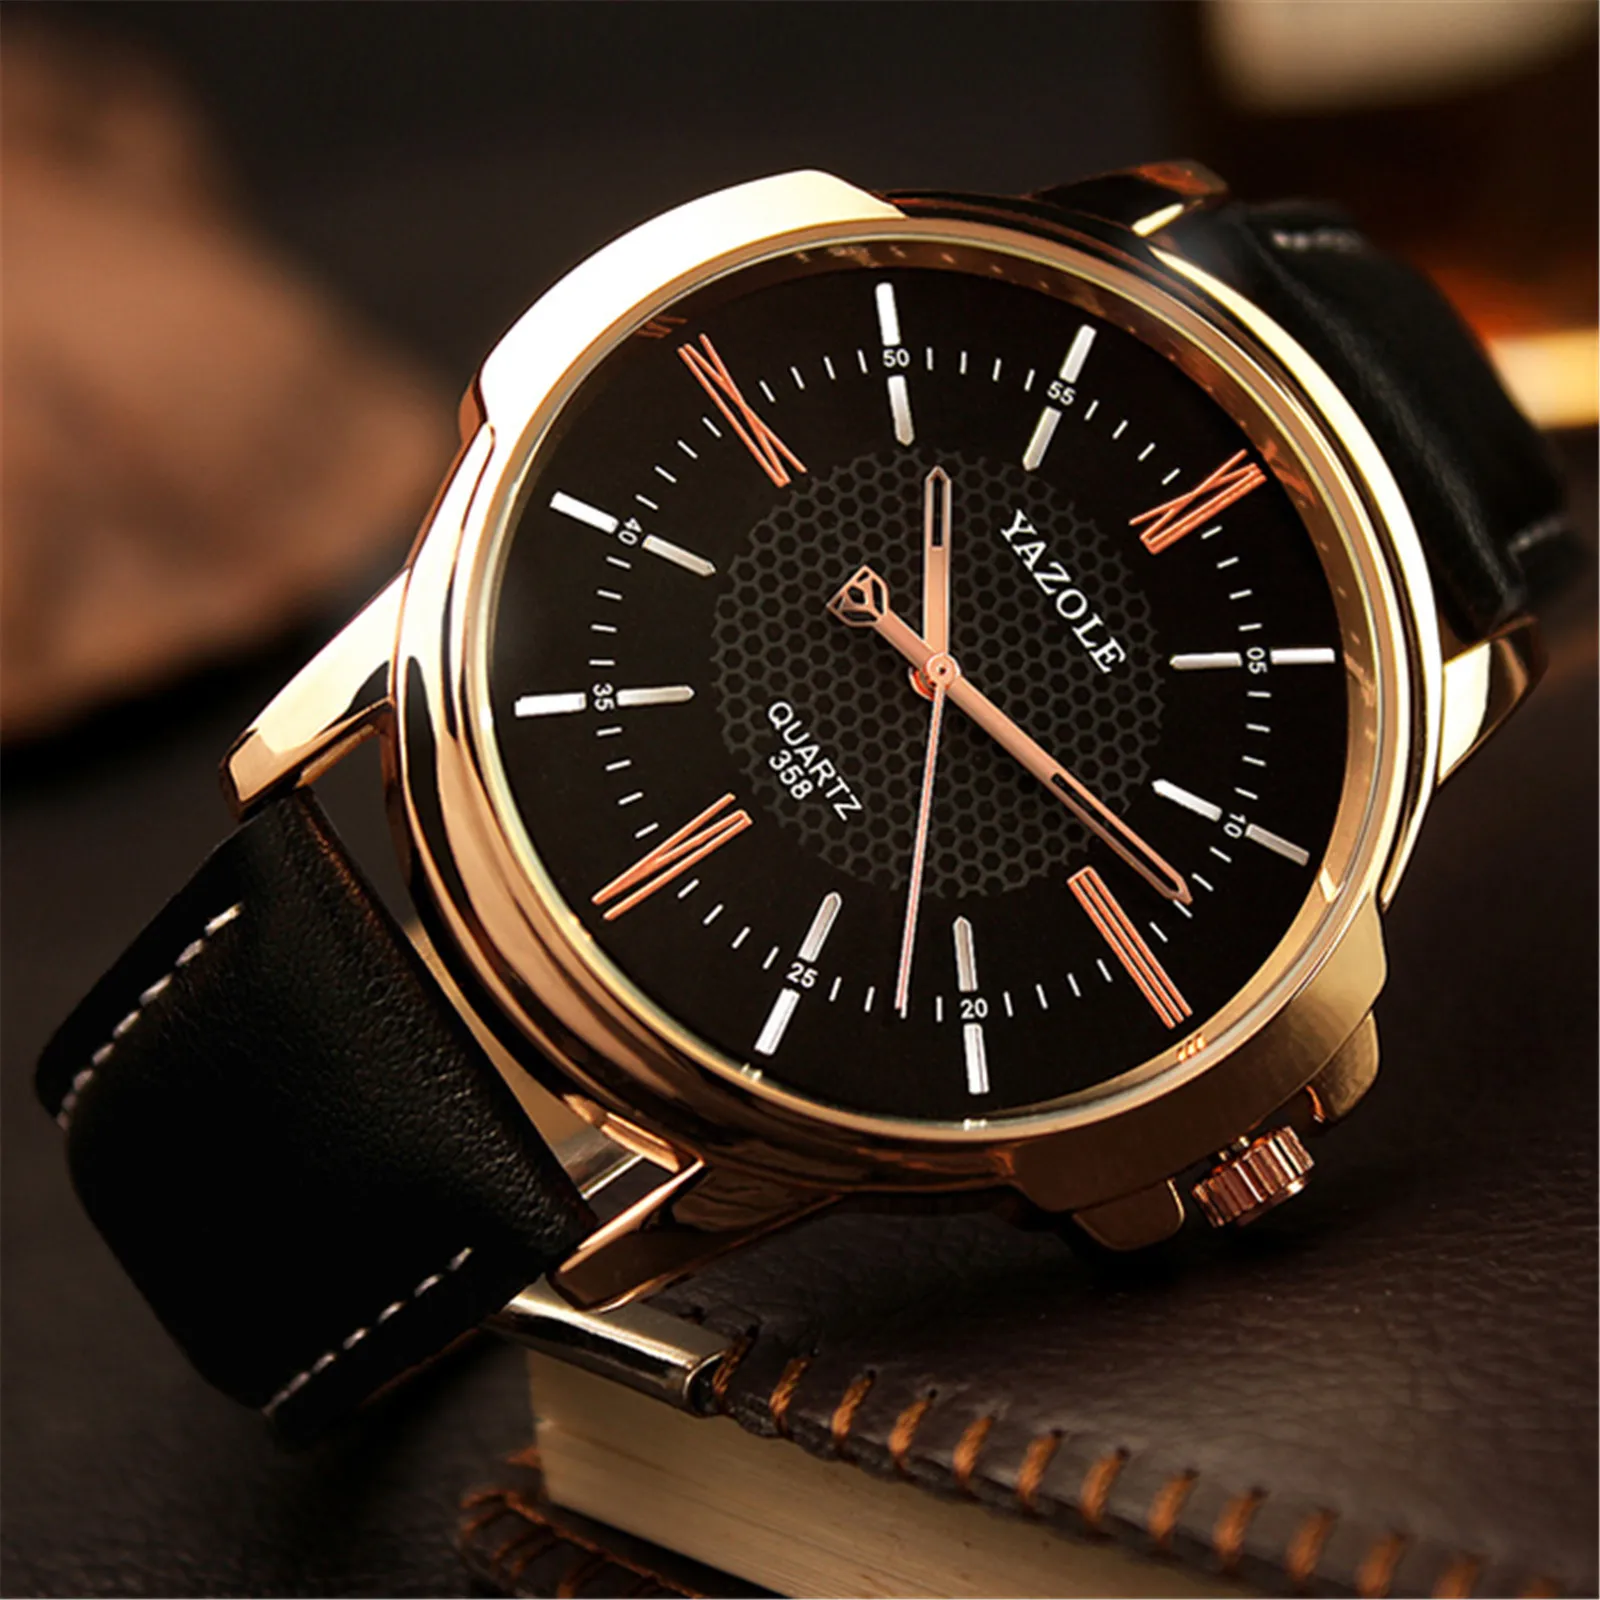 

New Watch Quartz Analog Wrist Watch Black Band Black Dial Faux Leather Band Mens Blu-ray Roman Numerals Minimalist Watch